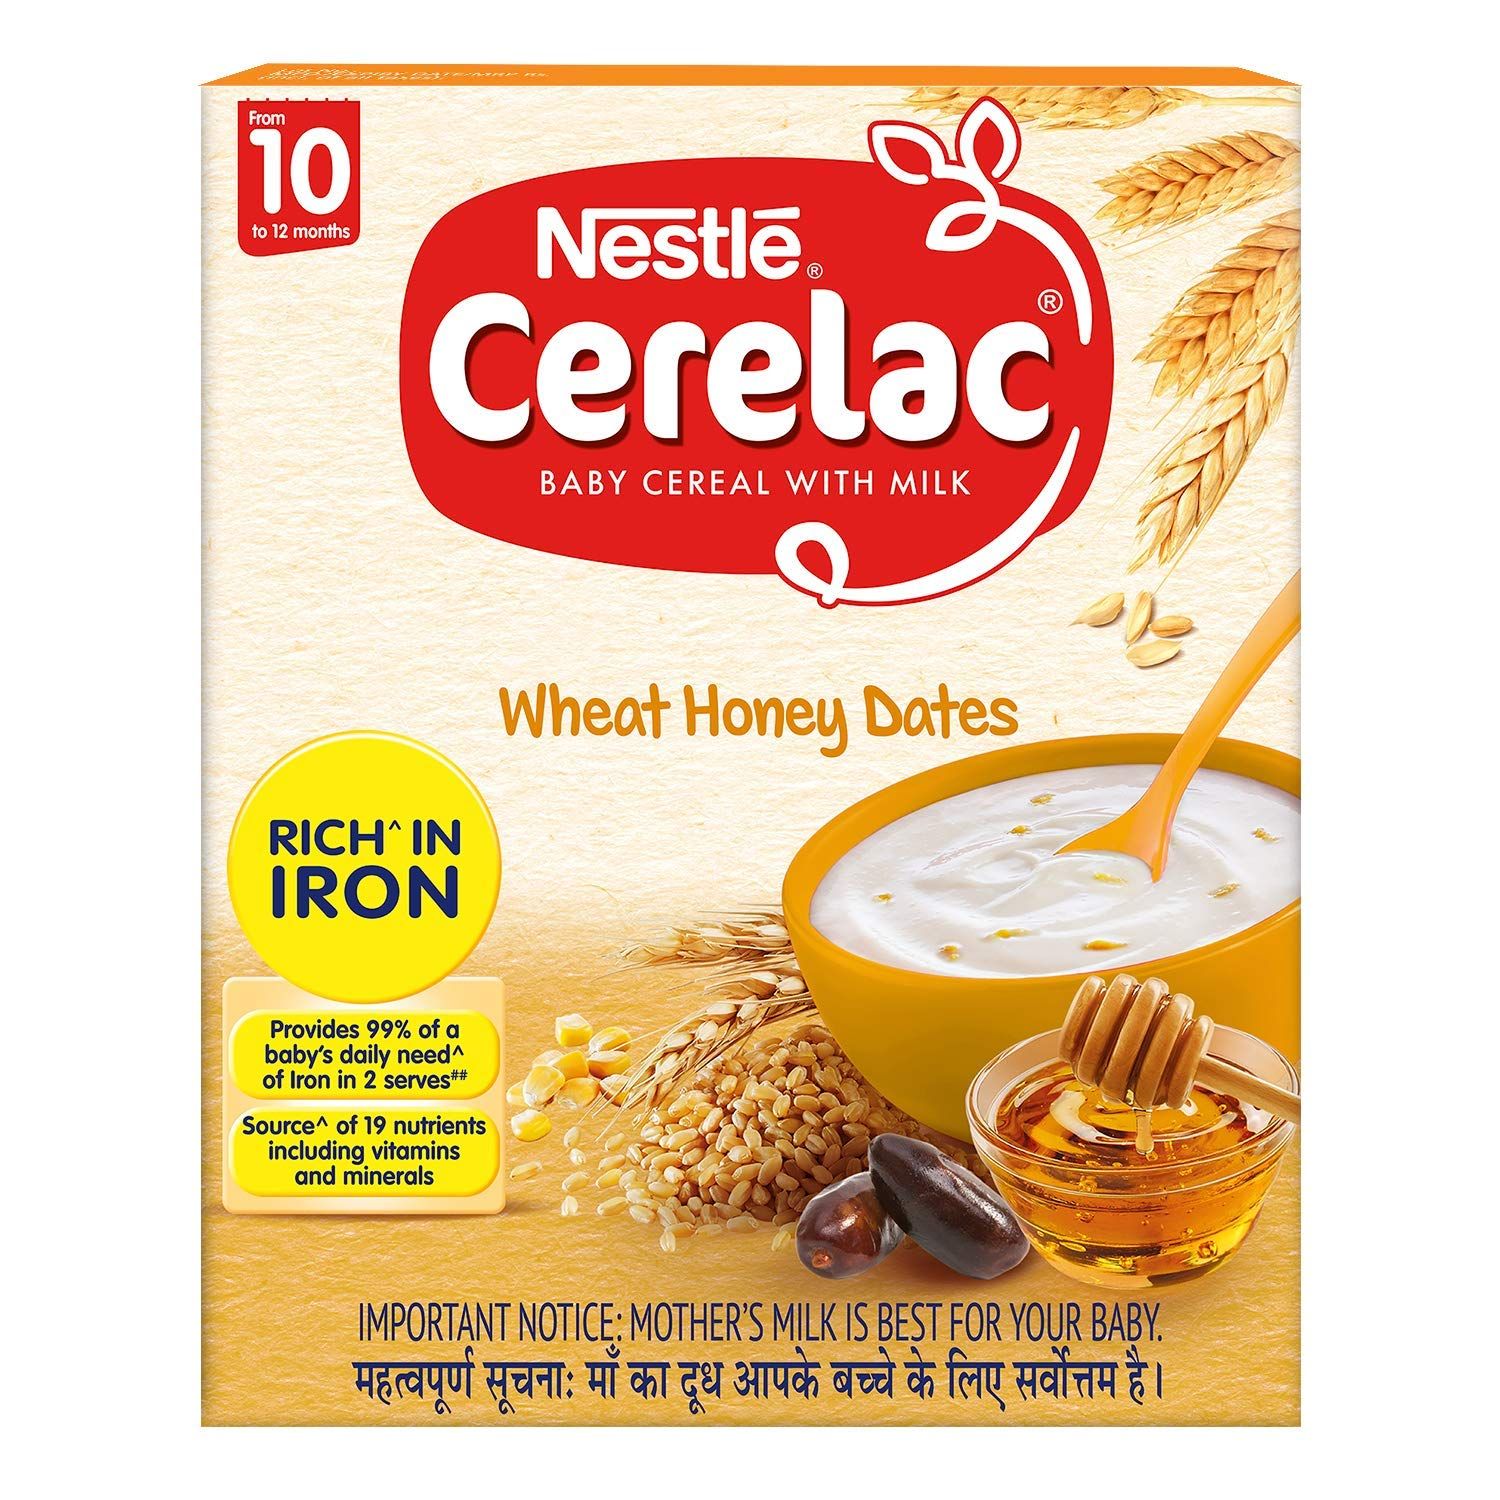 Nestle Cerelac Wheat Honey Dates Image